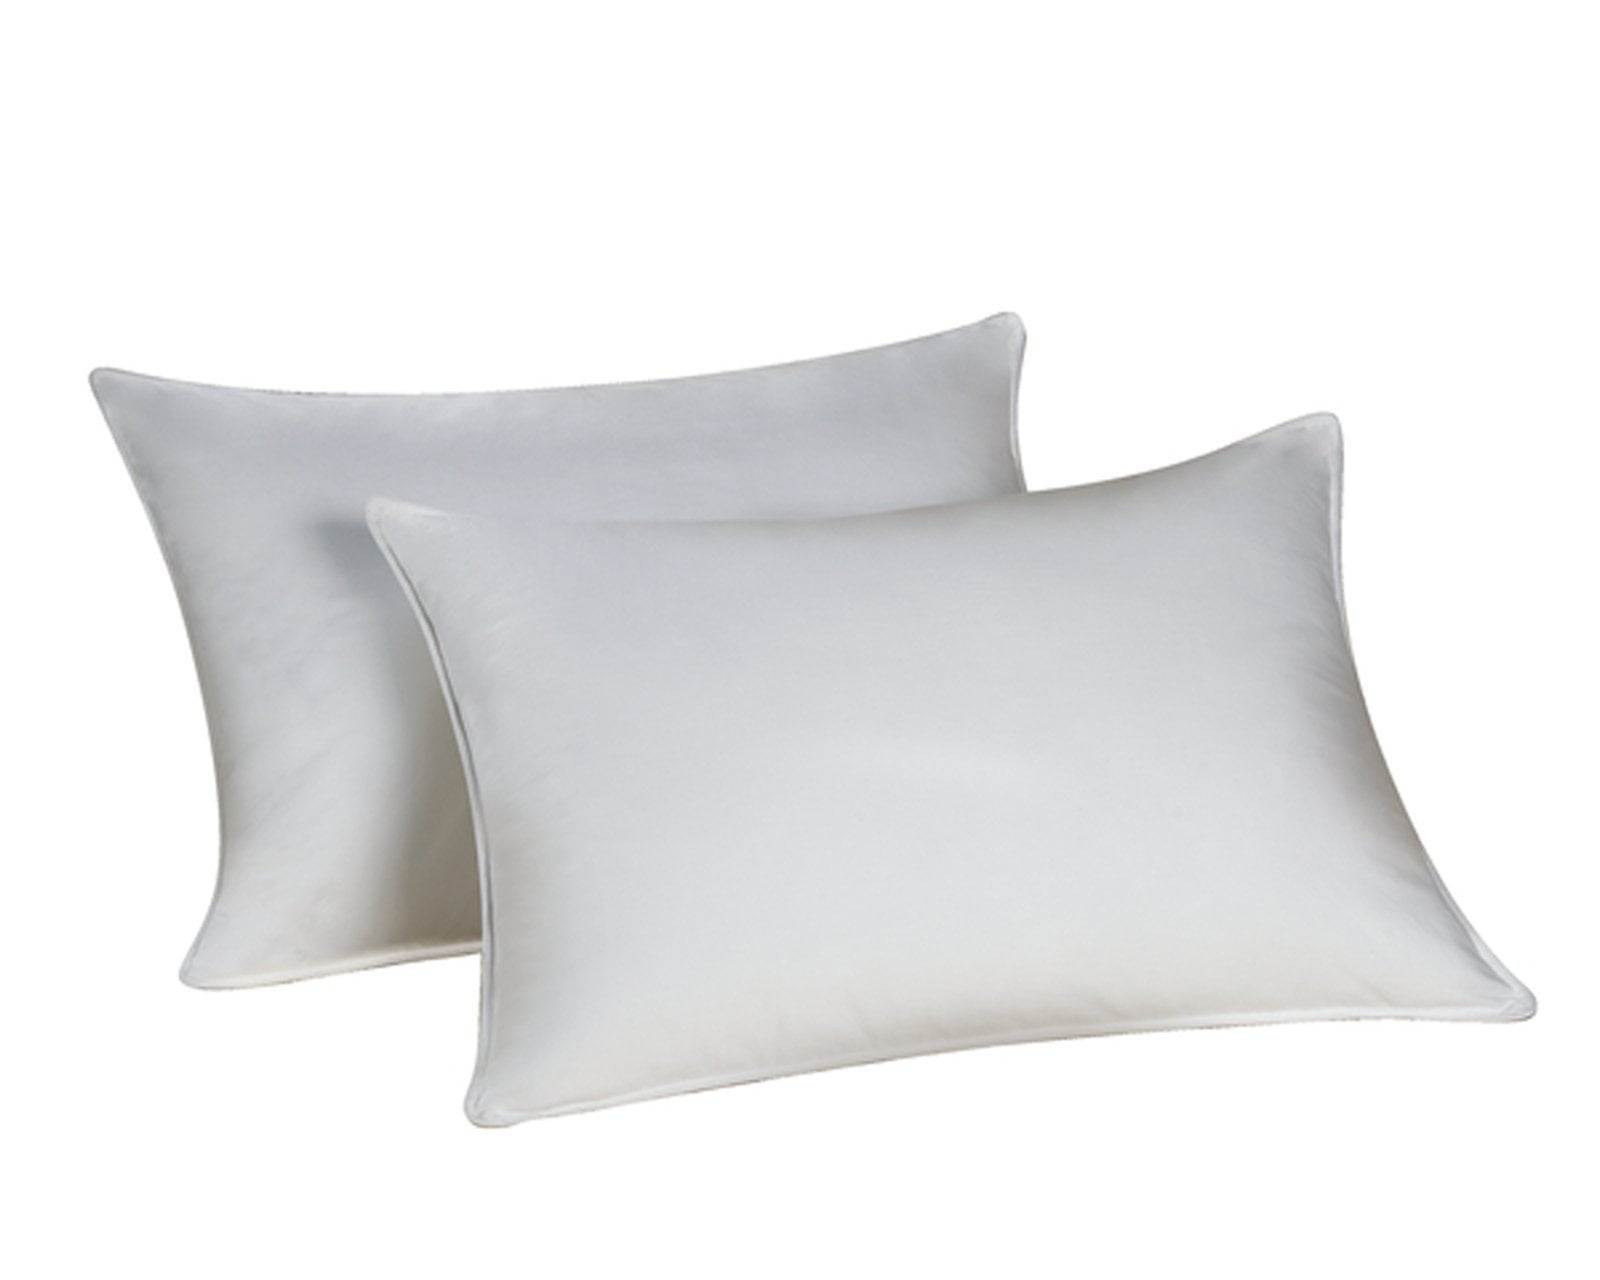 2 Pillows found at Marriott Envirosleep Dream Surrender Two Jumbo Pillow set 